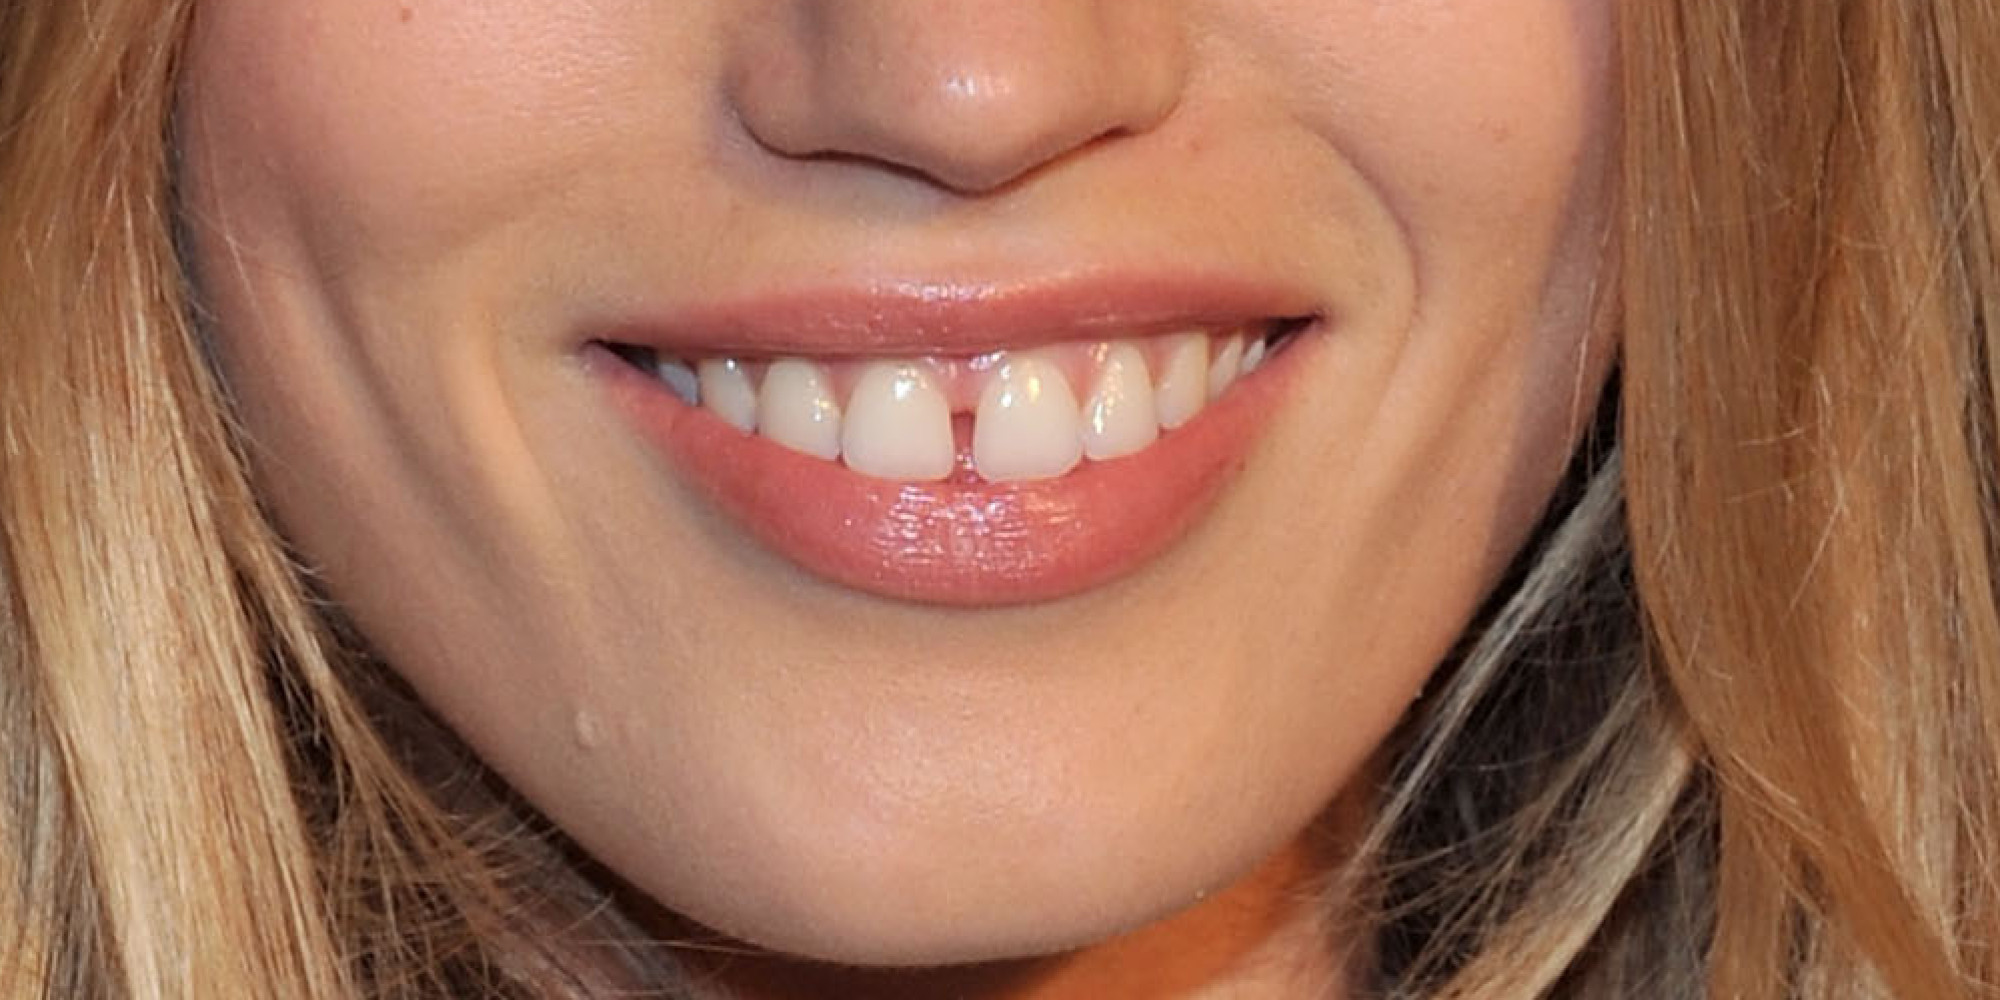 gap teeth models toothed between braces space tooth gaps comes making trend